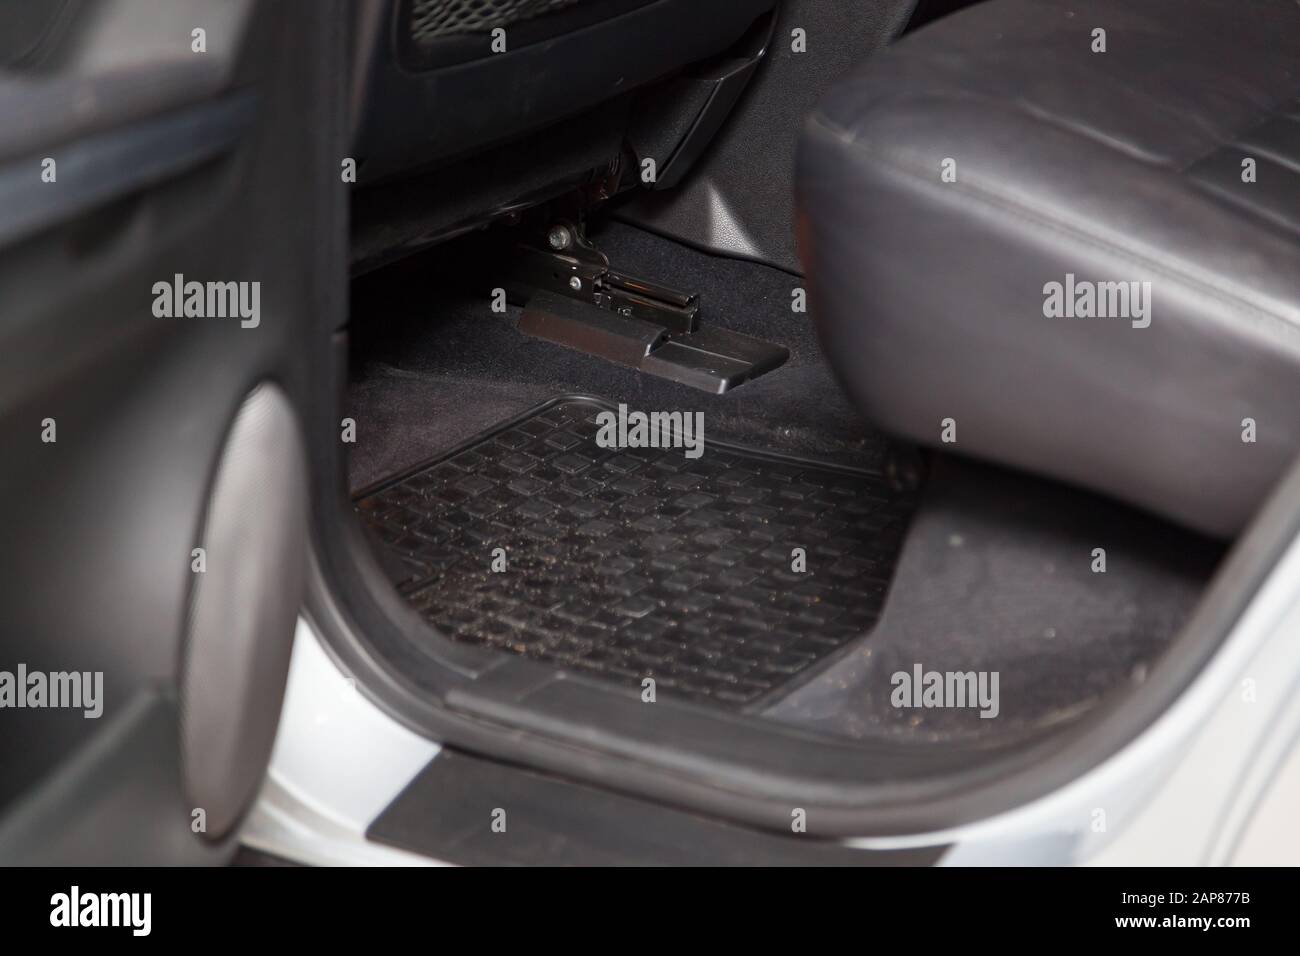 Clean Car Floor Mats Of Black Rubber Under Rear Passenger Seat In